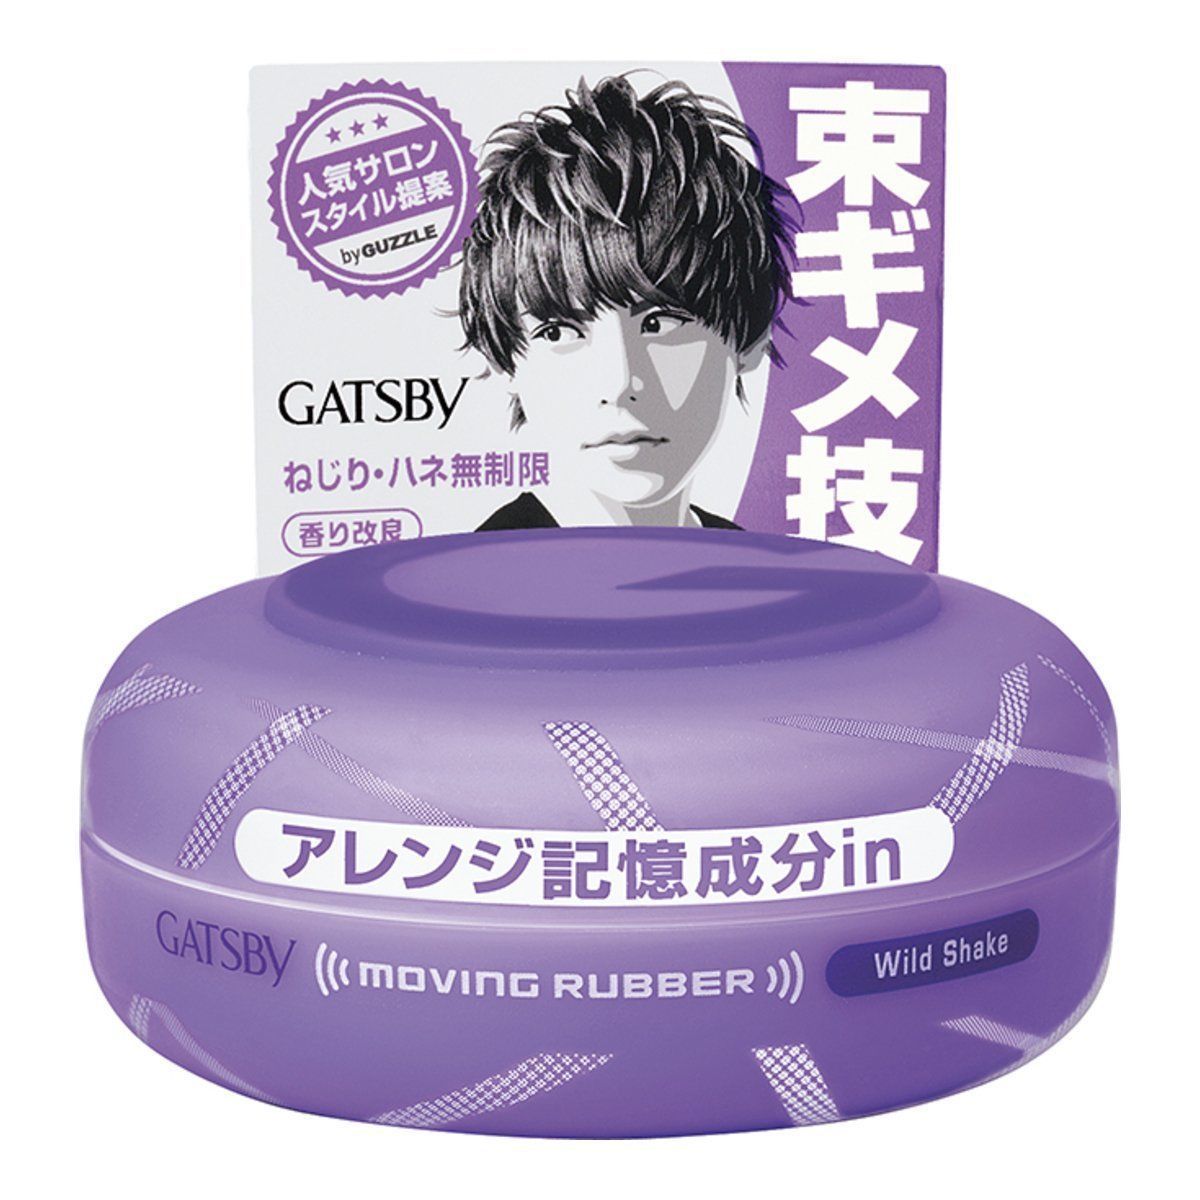 Mandom Gatsby Moving Rubber Hair Wax Wild Shake 80g-Japanese Taste